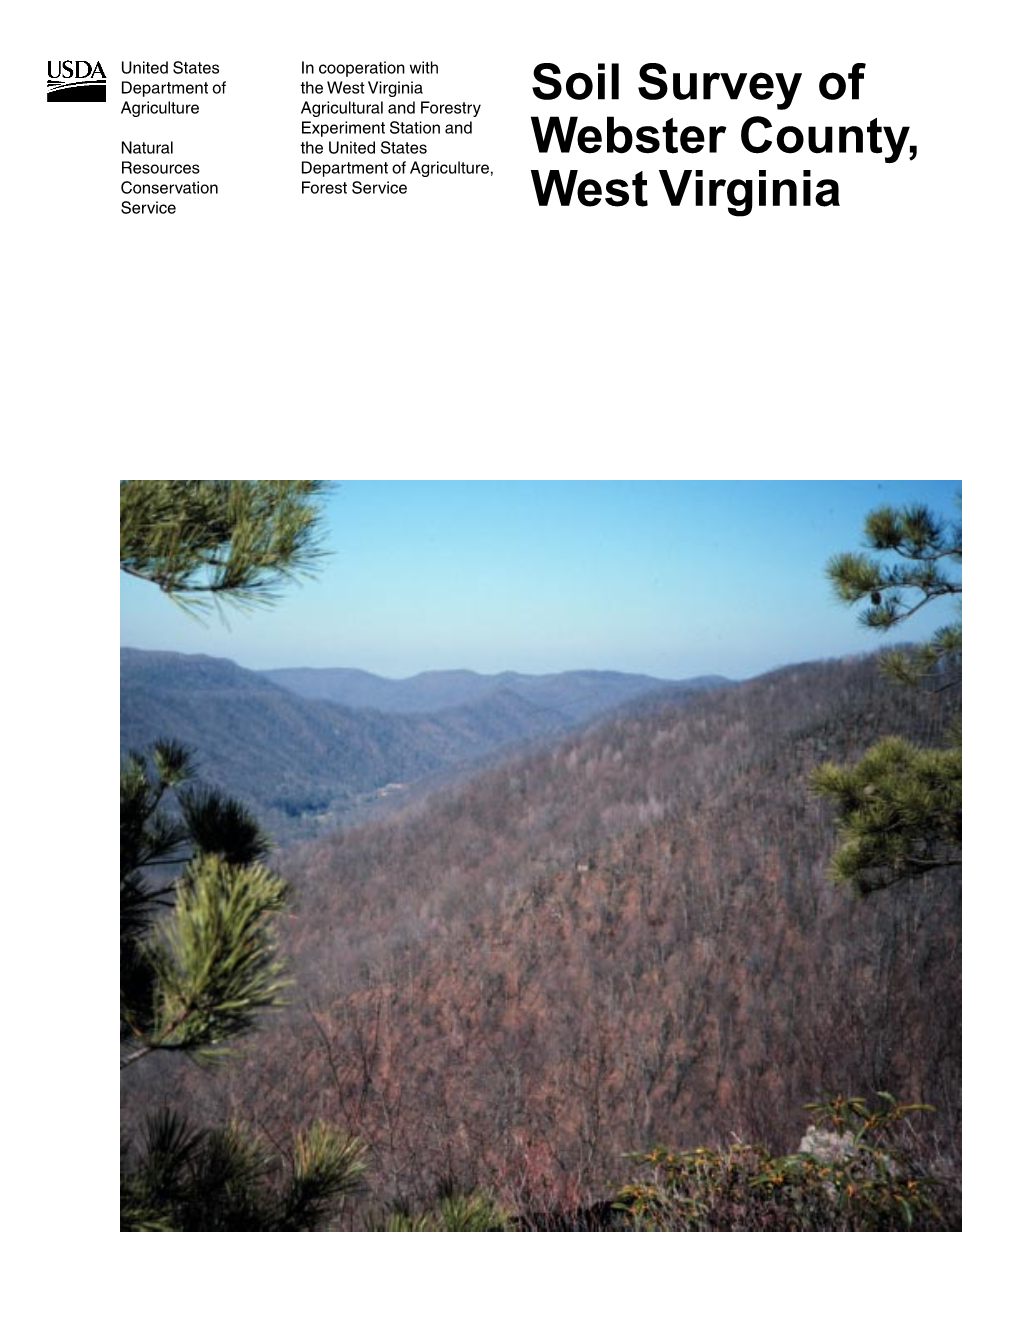 Soil Survey of Webster County, West Virginia